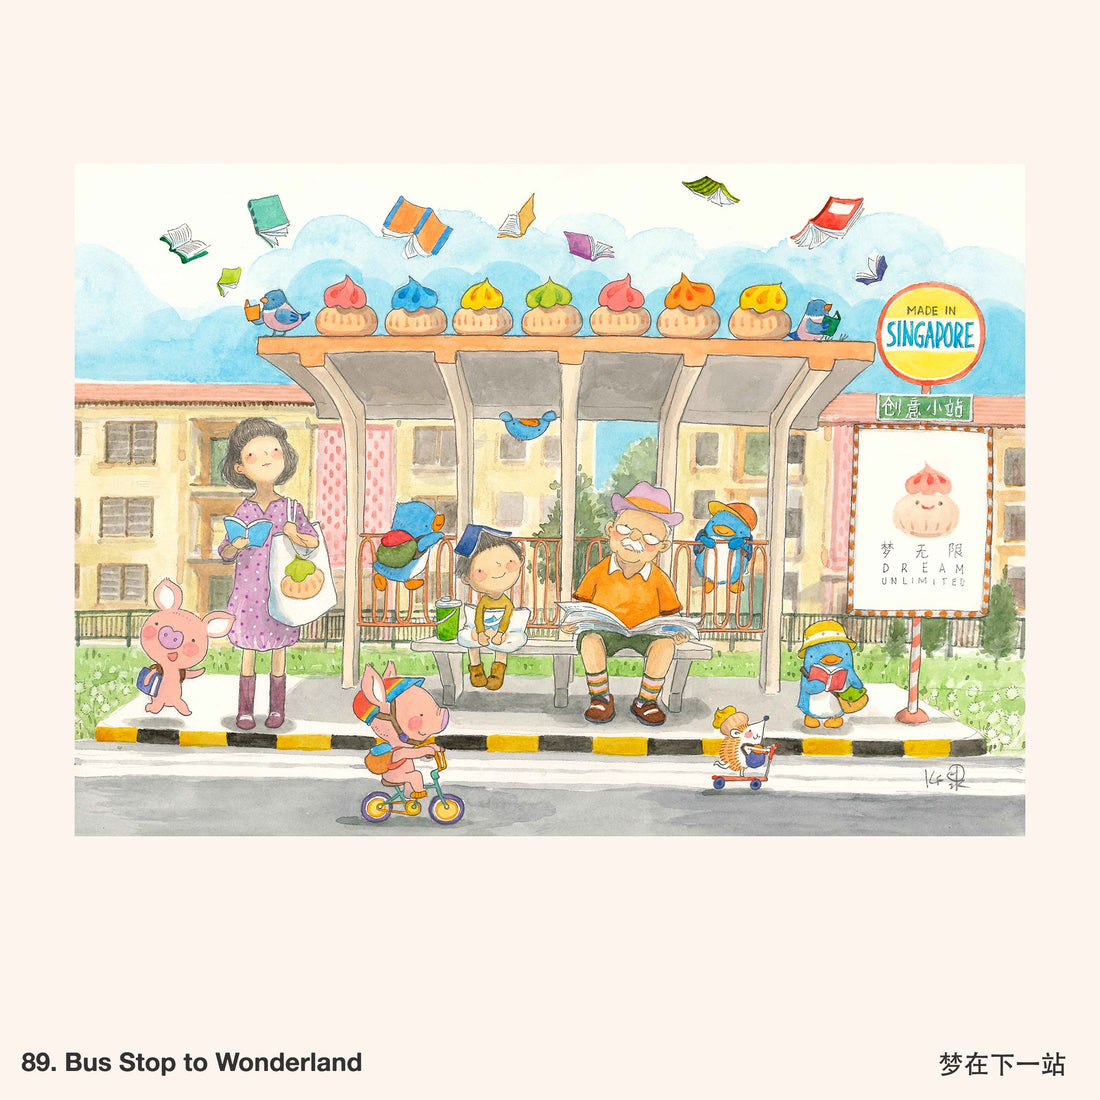 89. Bus Stop to Wonderland Artwork